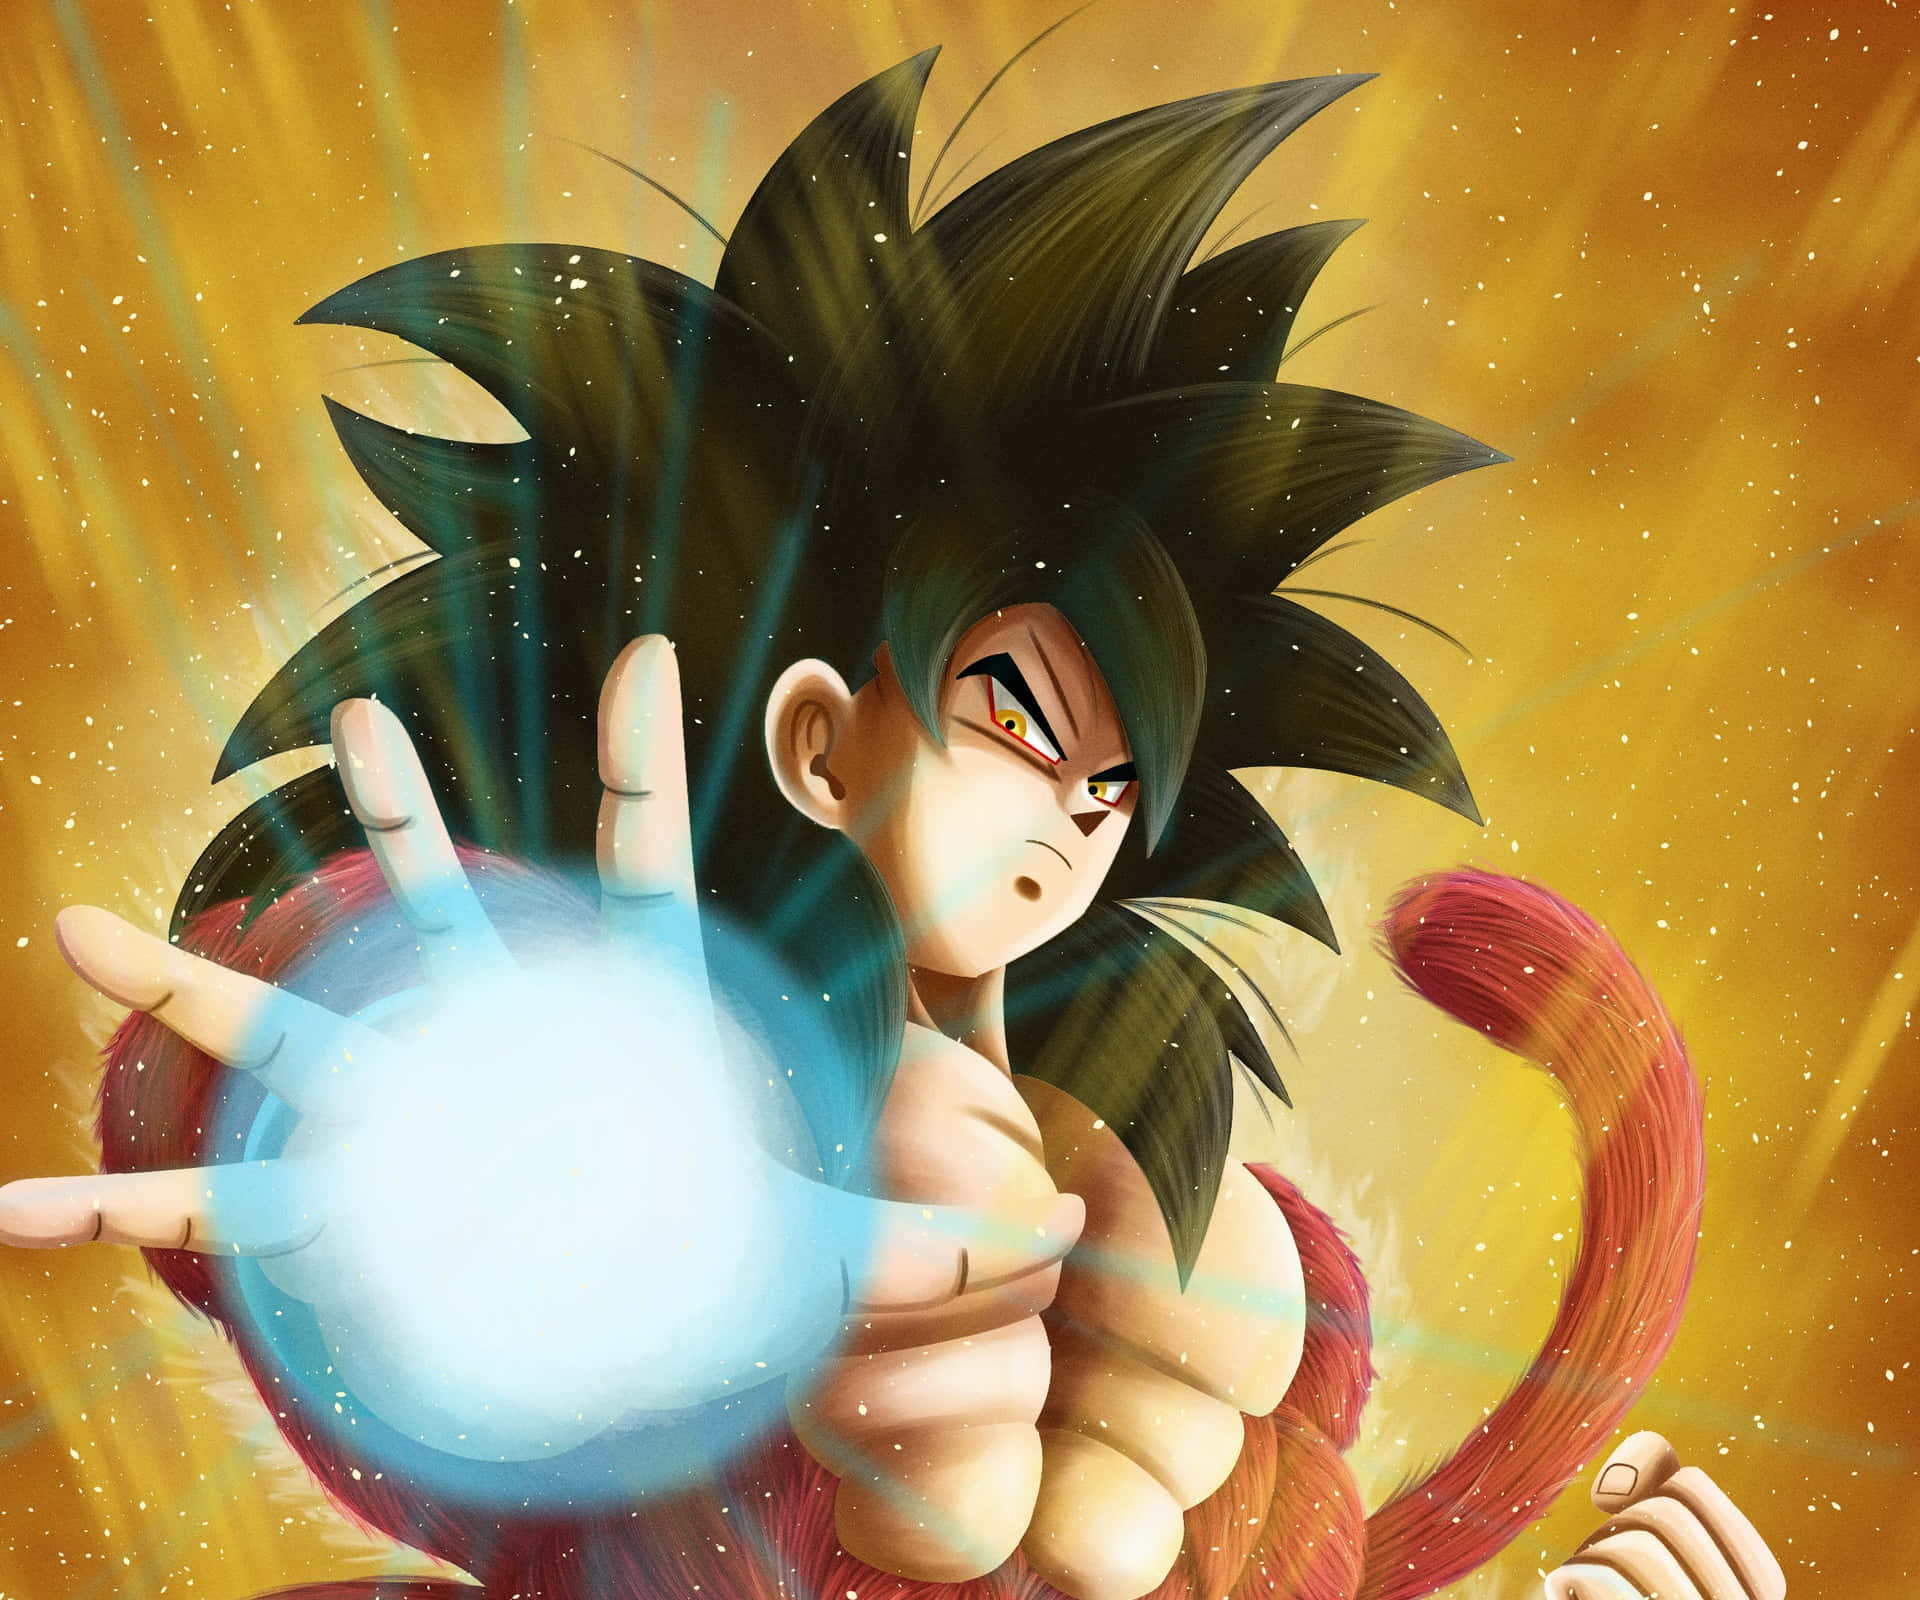 Goku Becomes a Super Saiyan 4 in a Fierce Fight Wallpaper